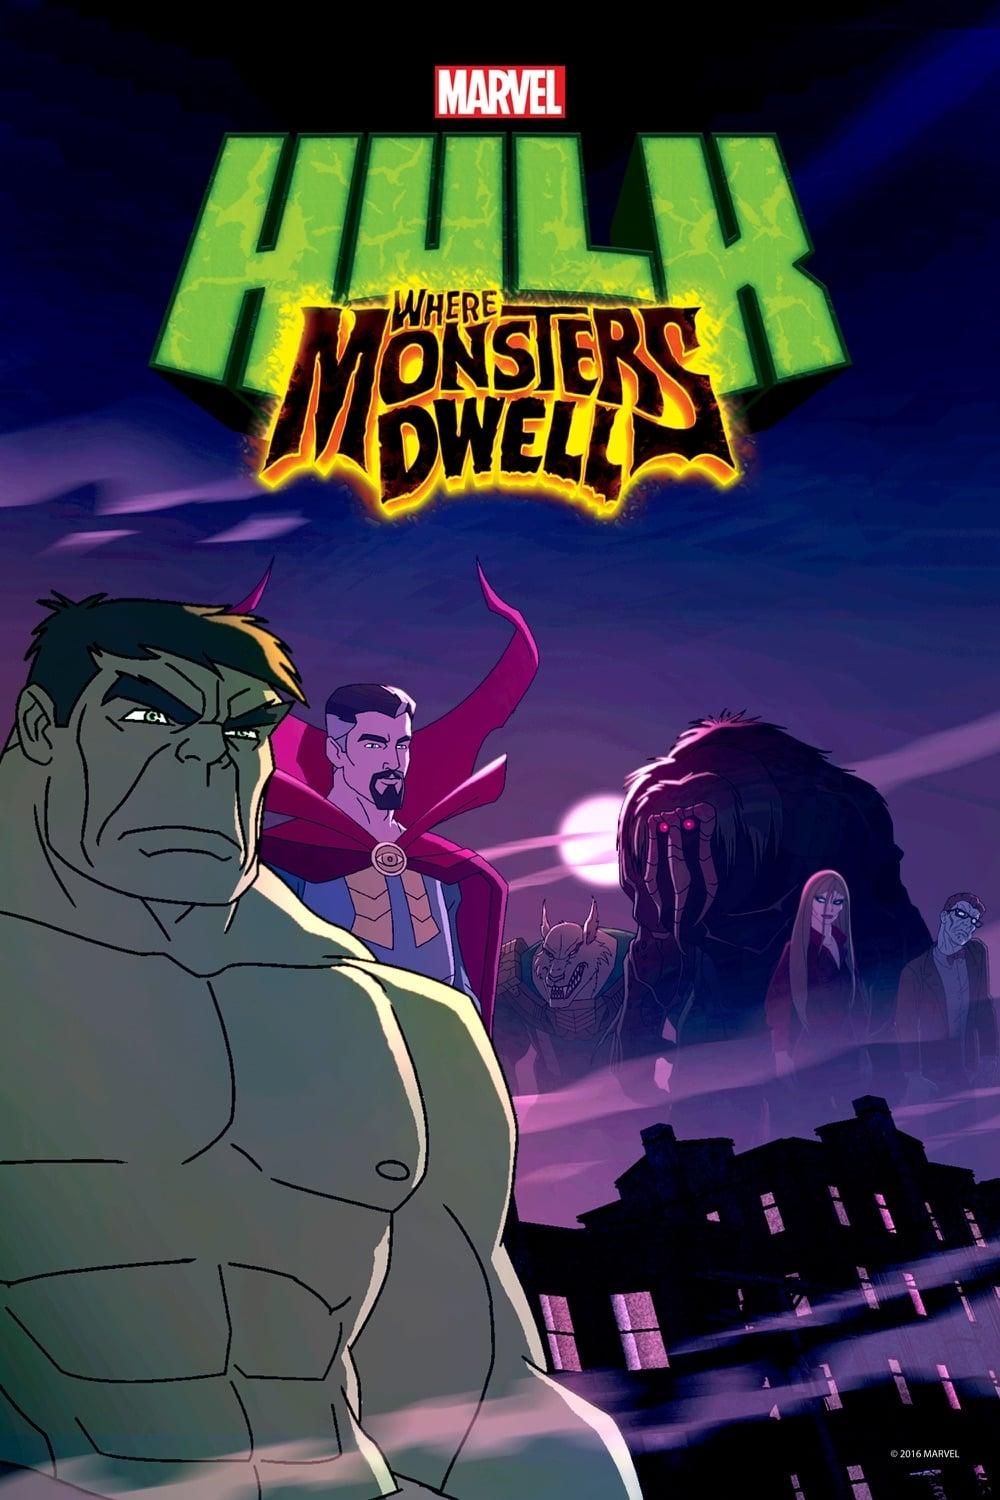 Hulk: Where Monsters Dwell poster